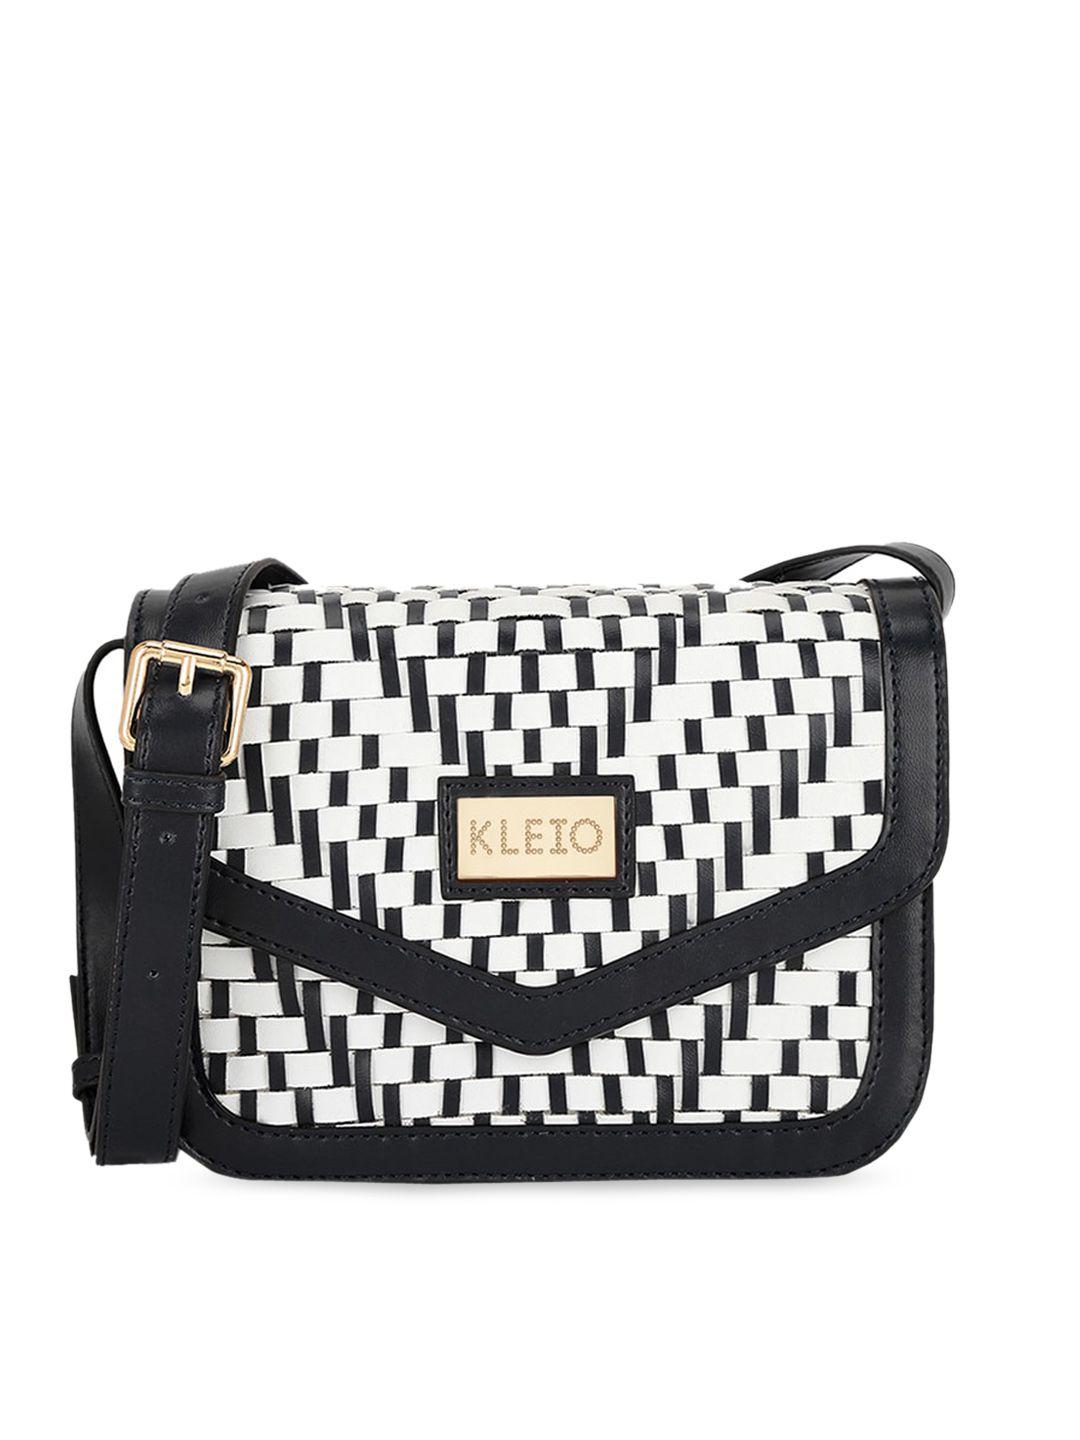 kleio black geometric pu structured sling bag